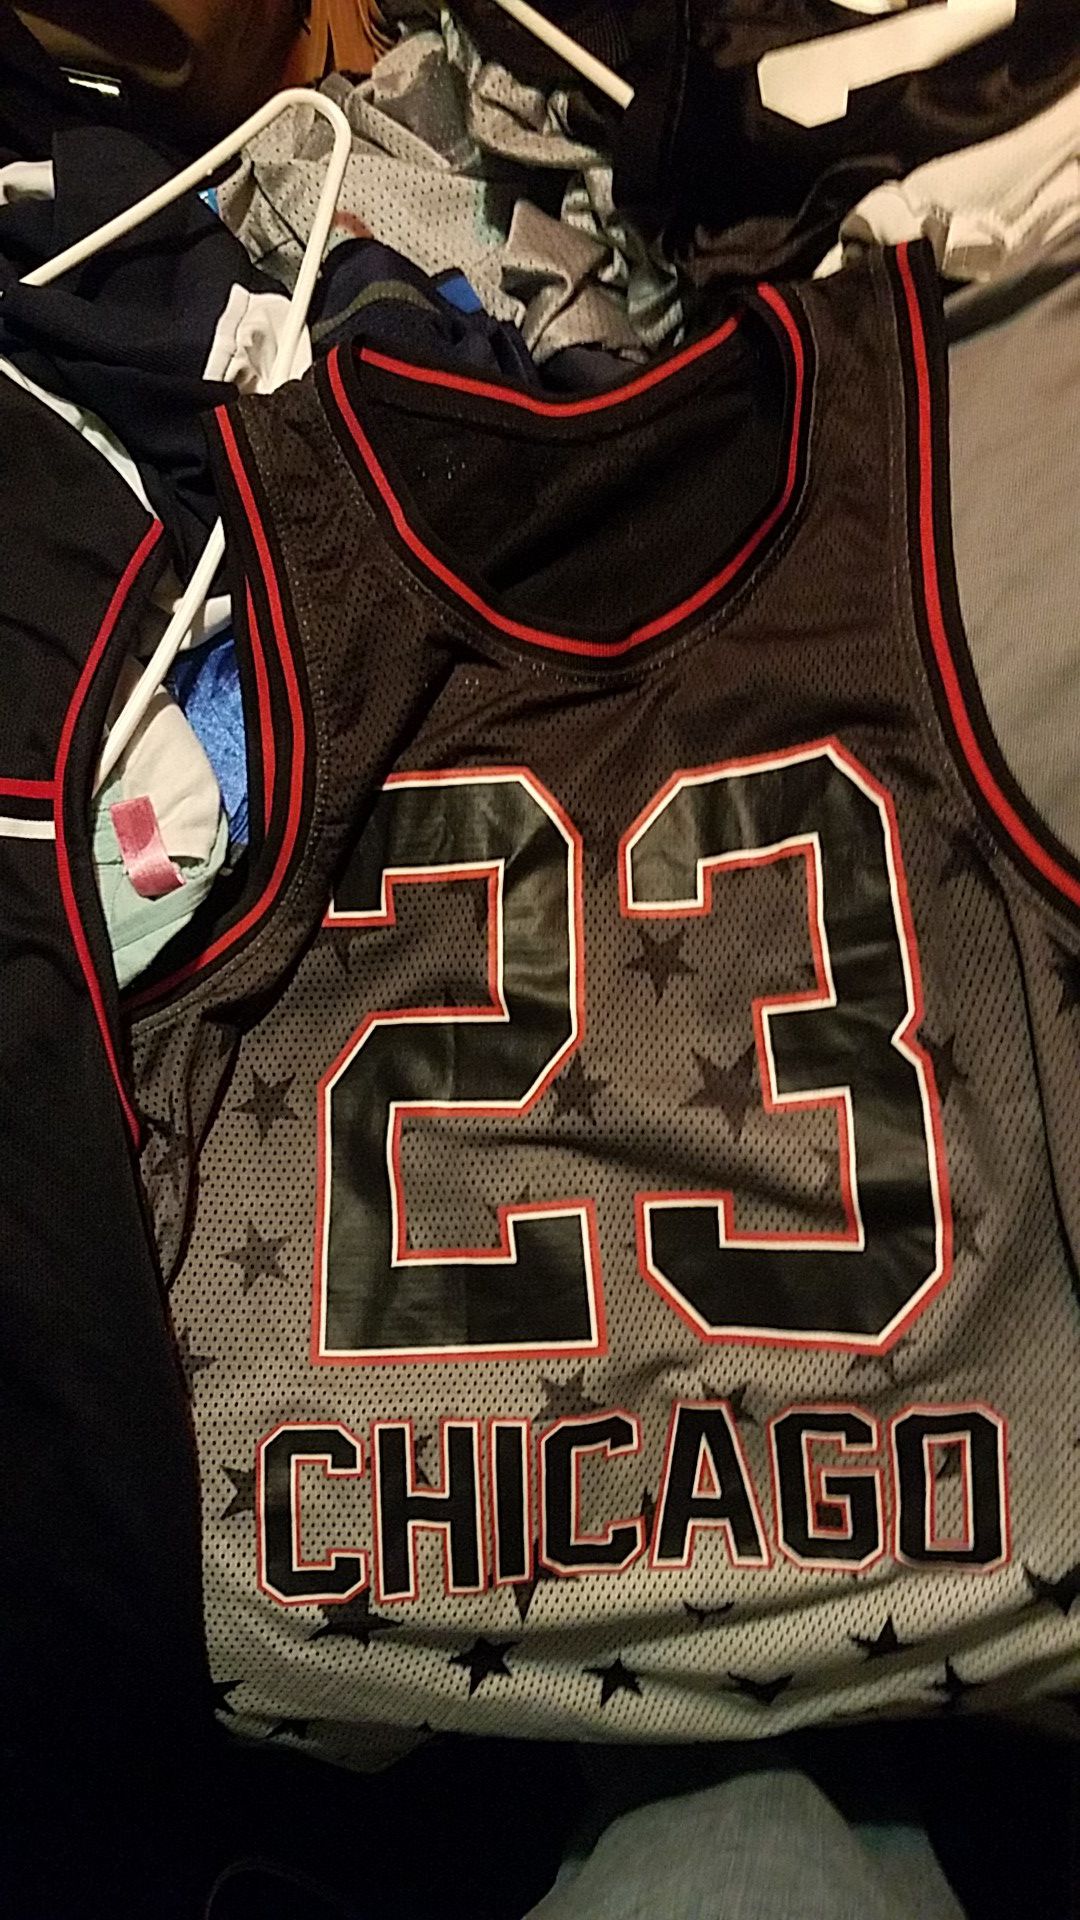 Chicago bulls jerseys both size large one is number 23 mr. Jordan himself